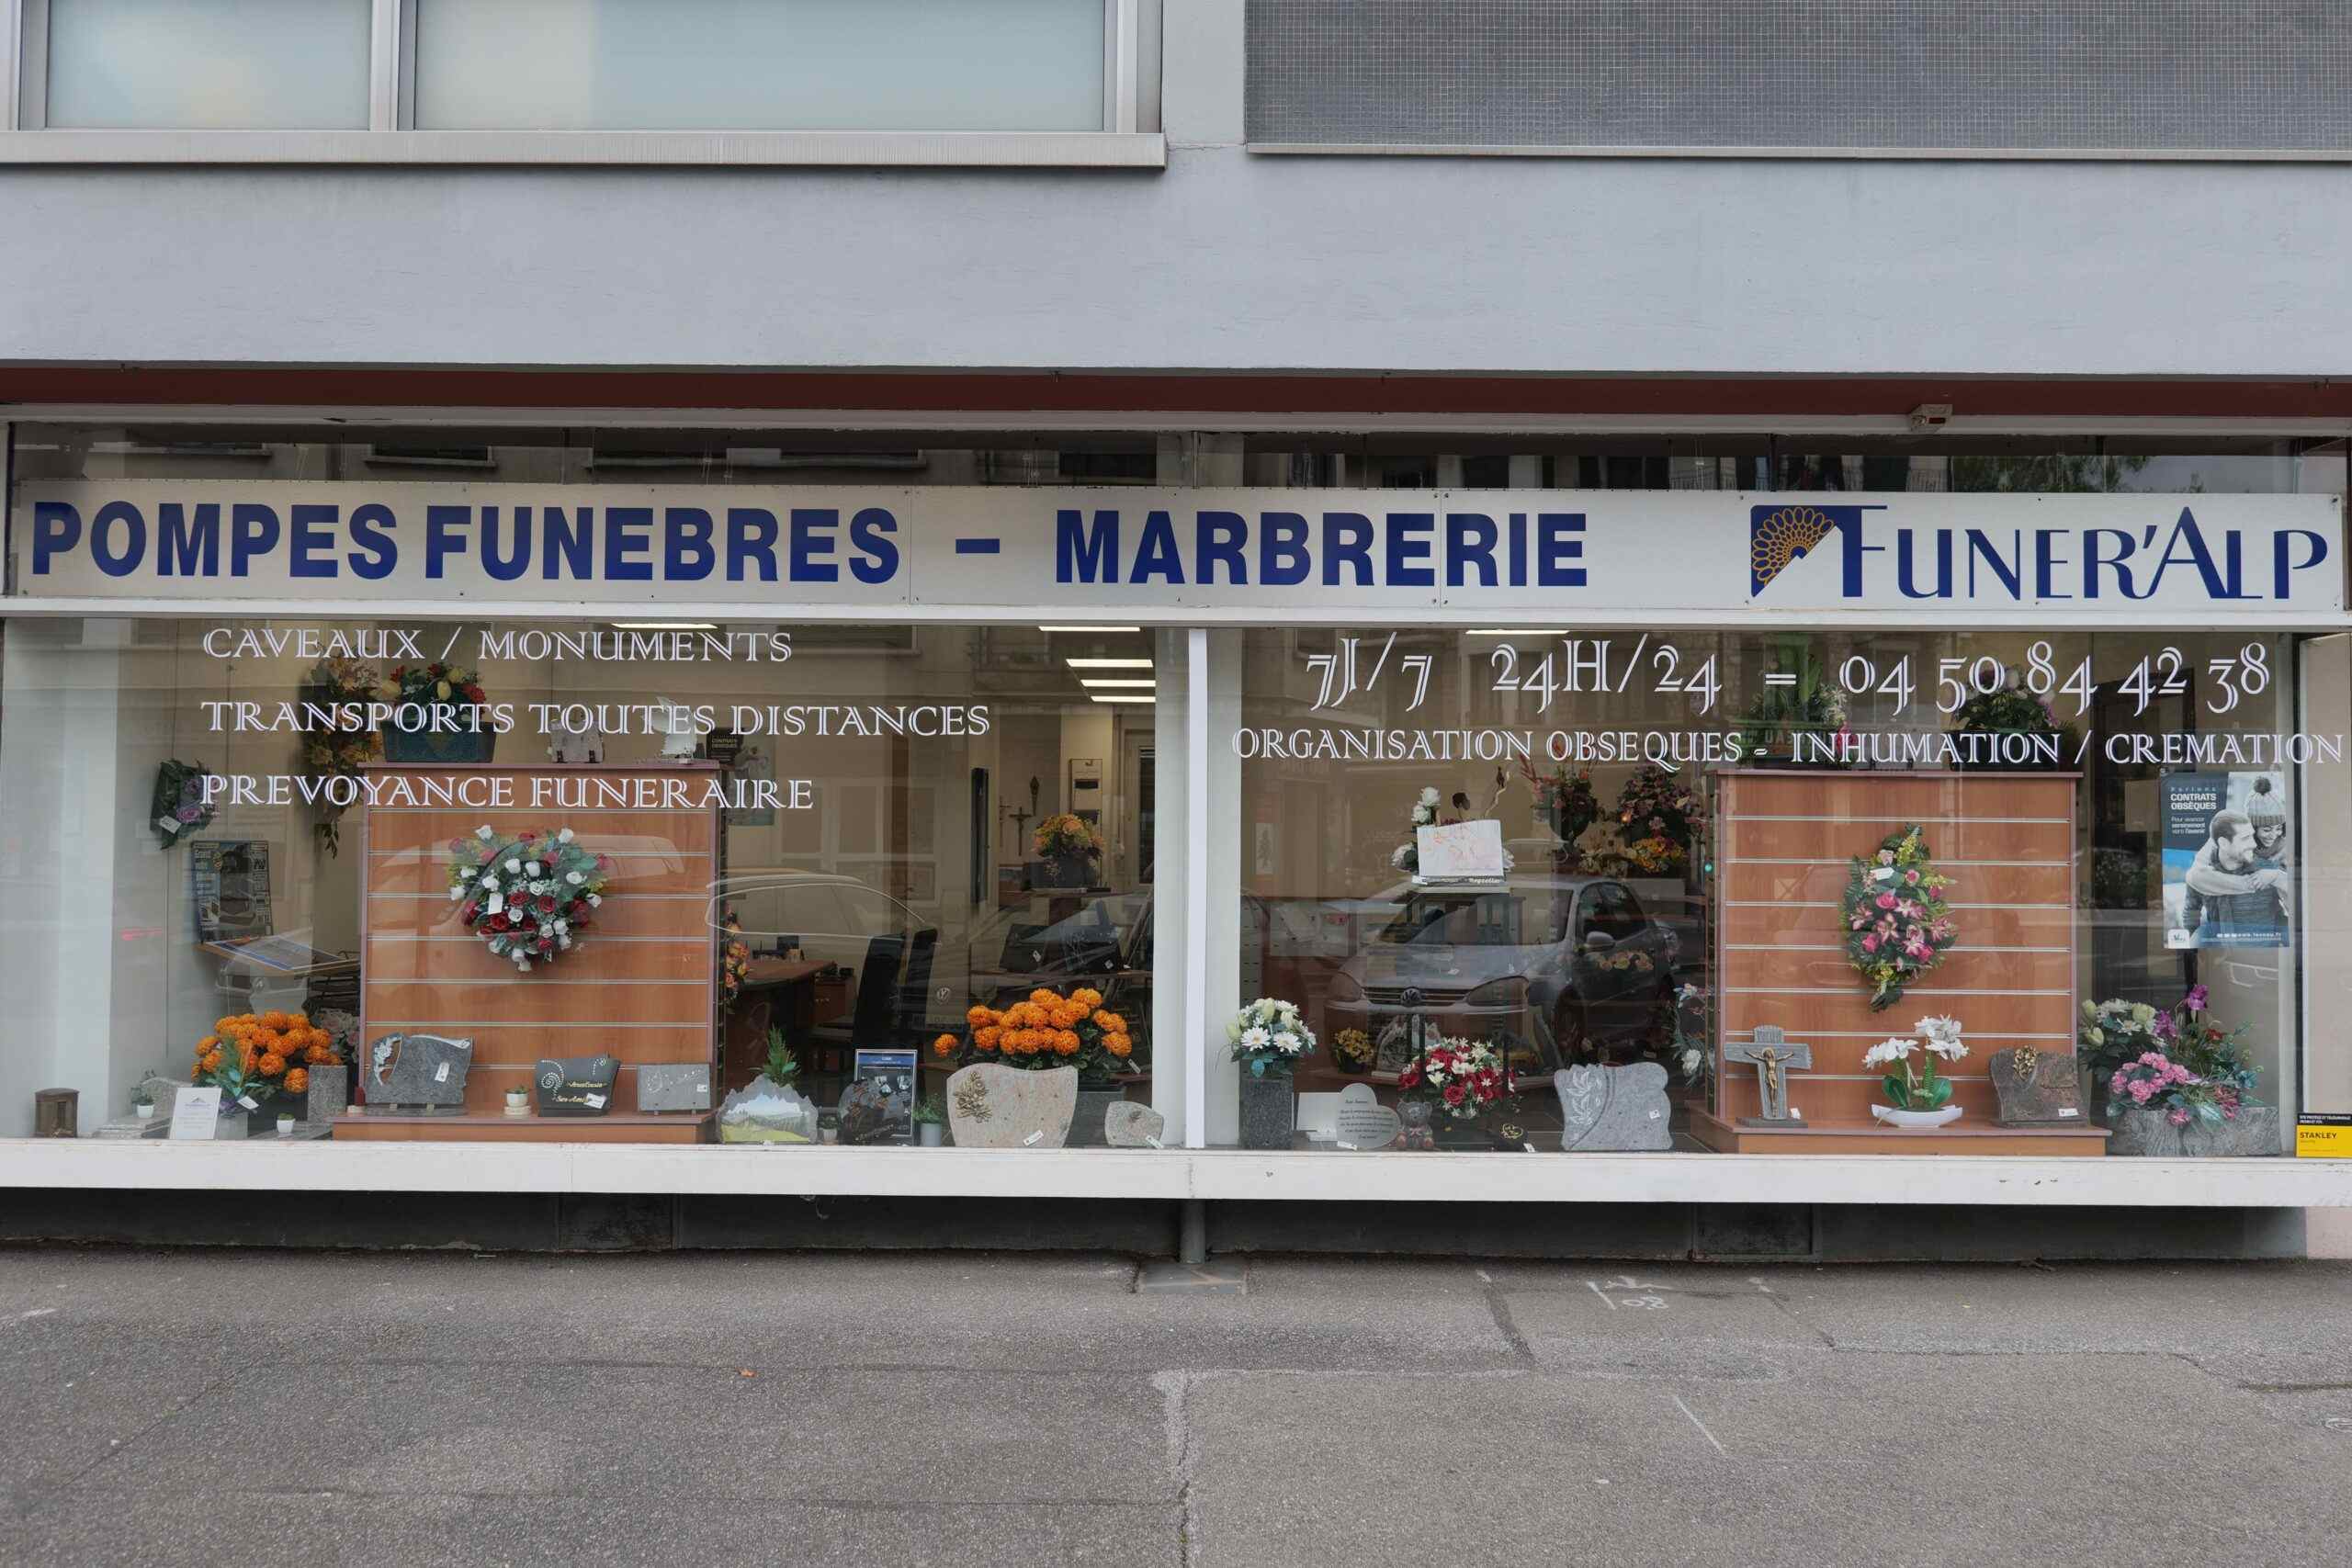 Photo de Pompes Funebres - Marbrerie Funeralp - Annemasse